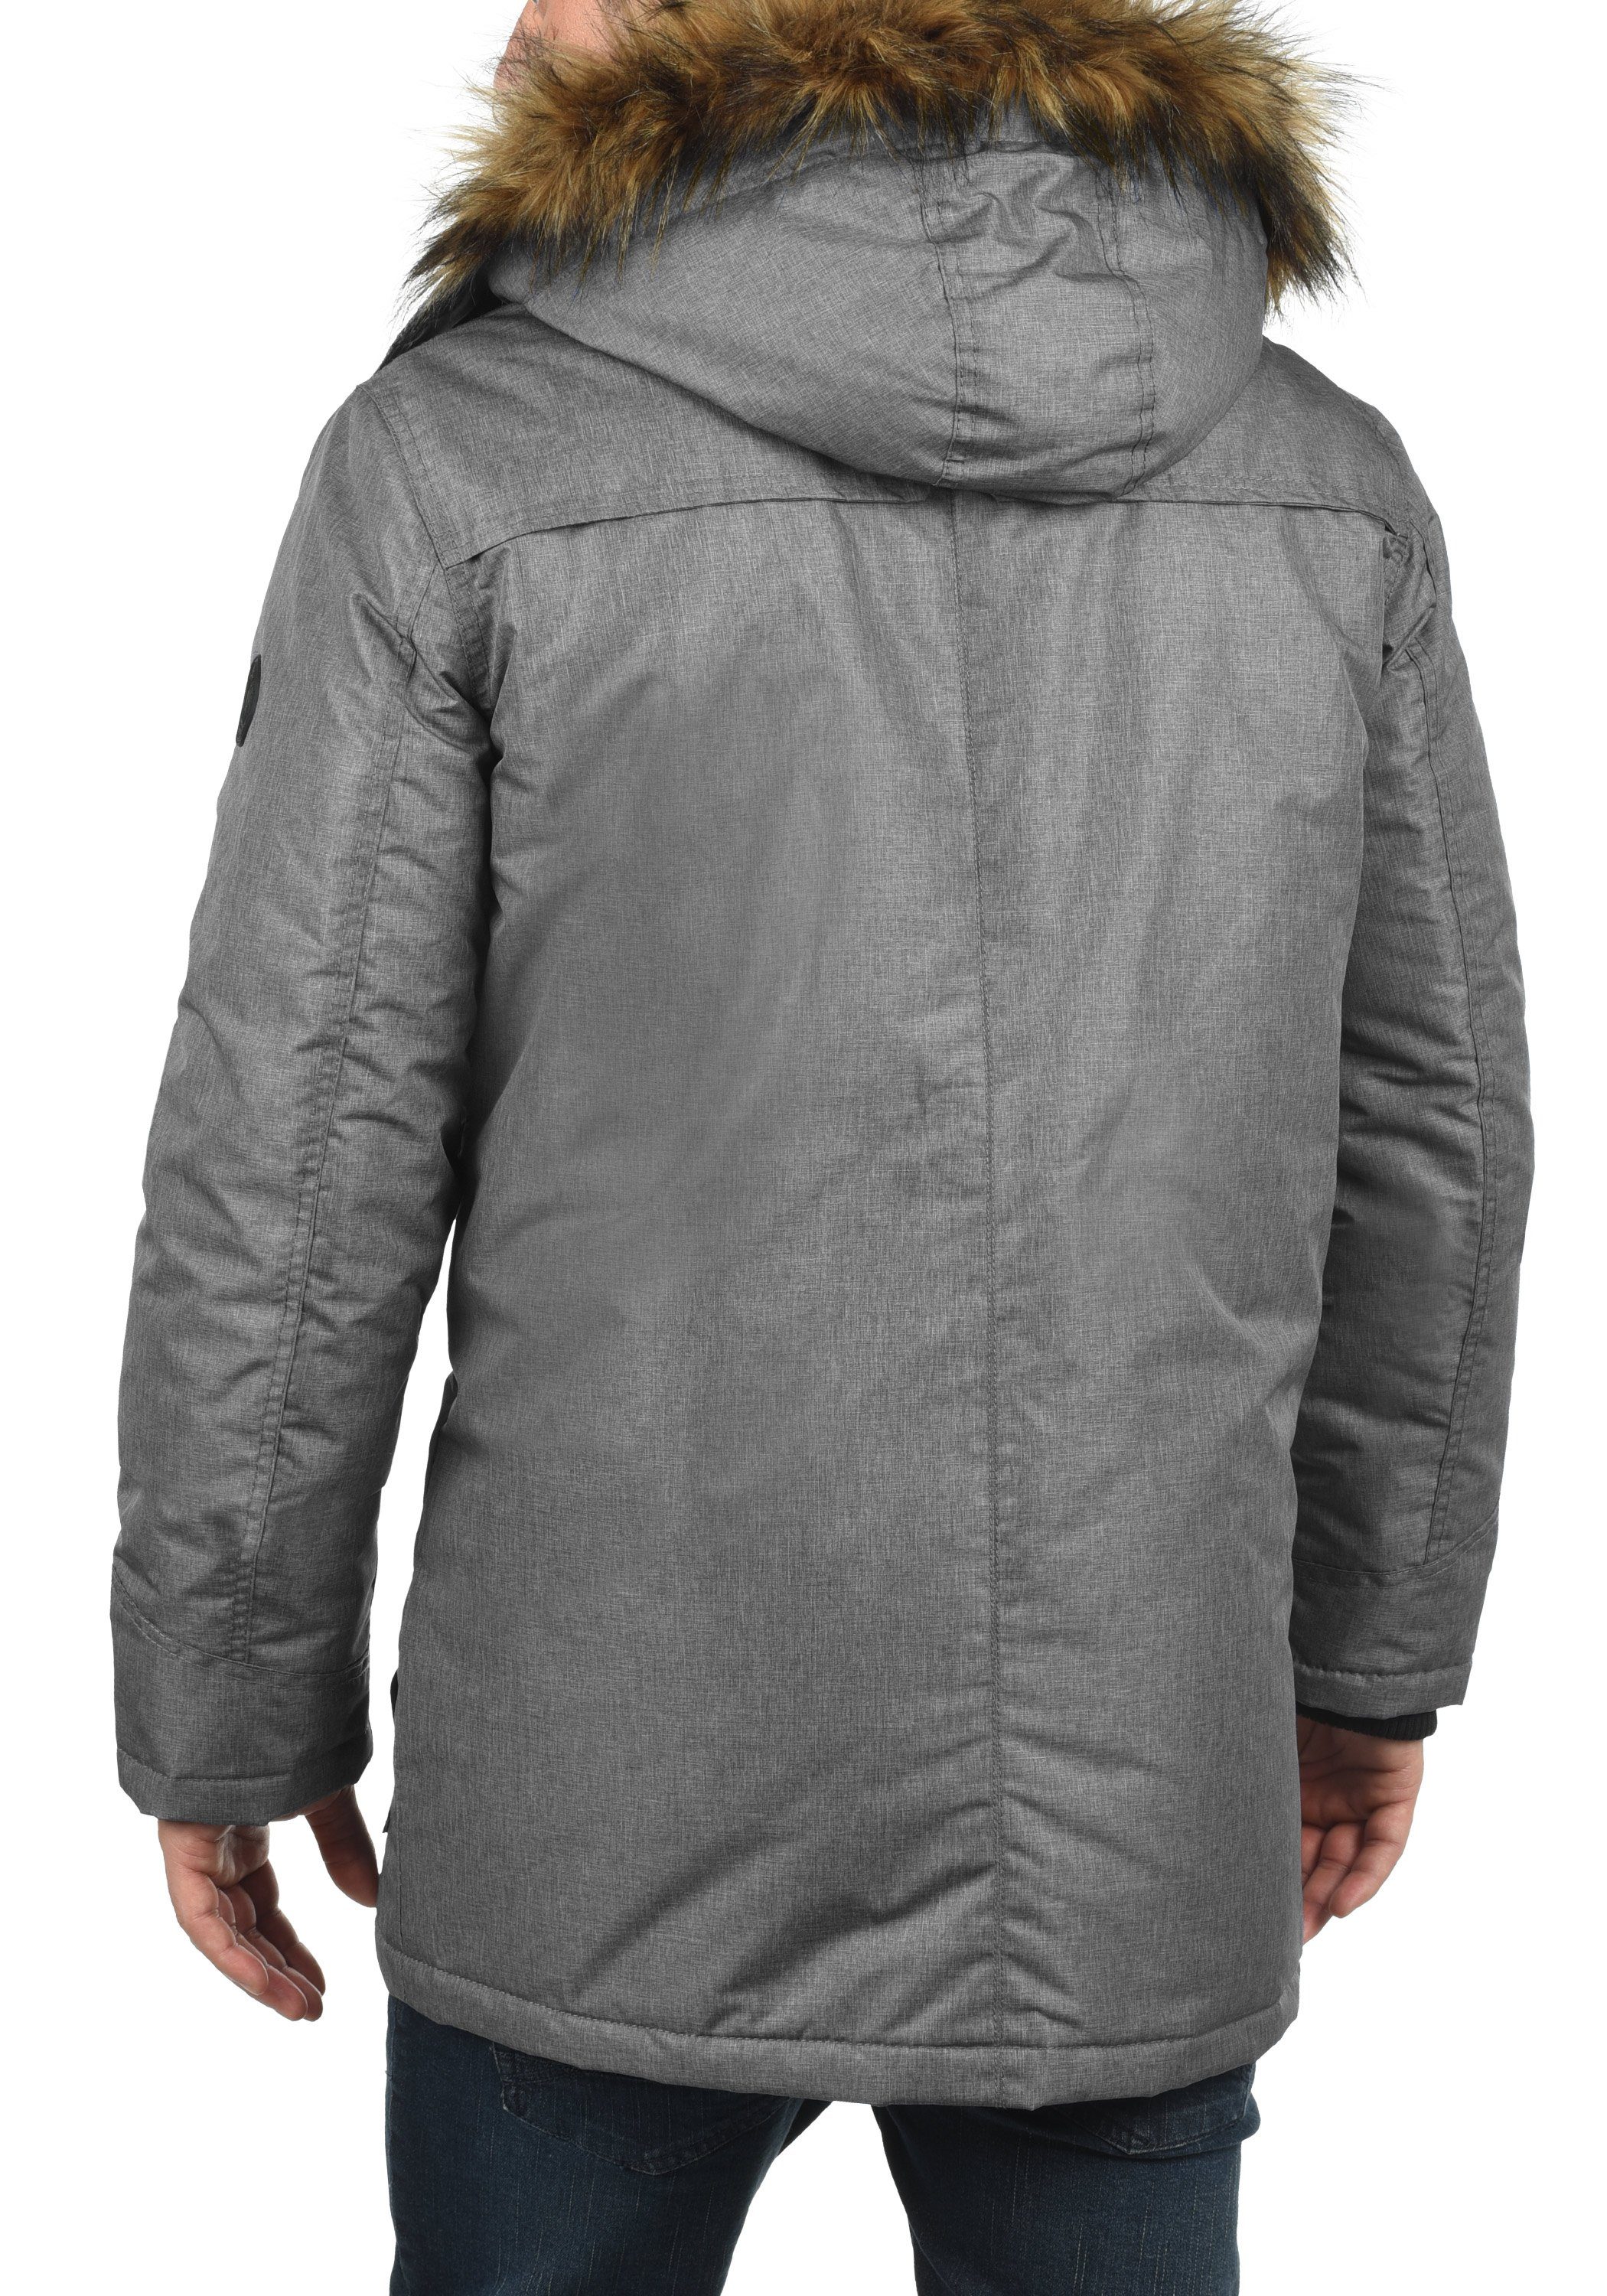 Solid Winterjacke SDOctavus und (8236) abnehmbarer lange Kapuze Jacke mit Kunstfellkragen Grey Melange